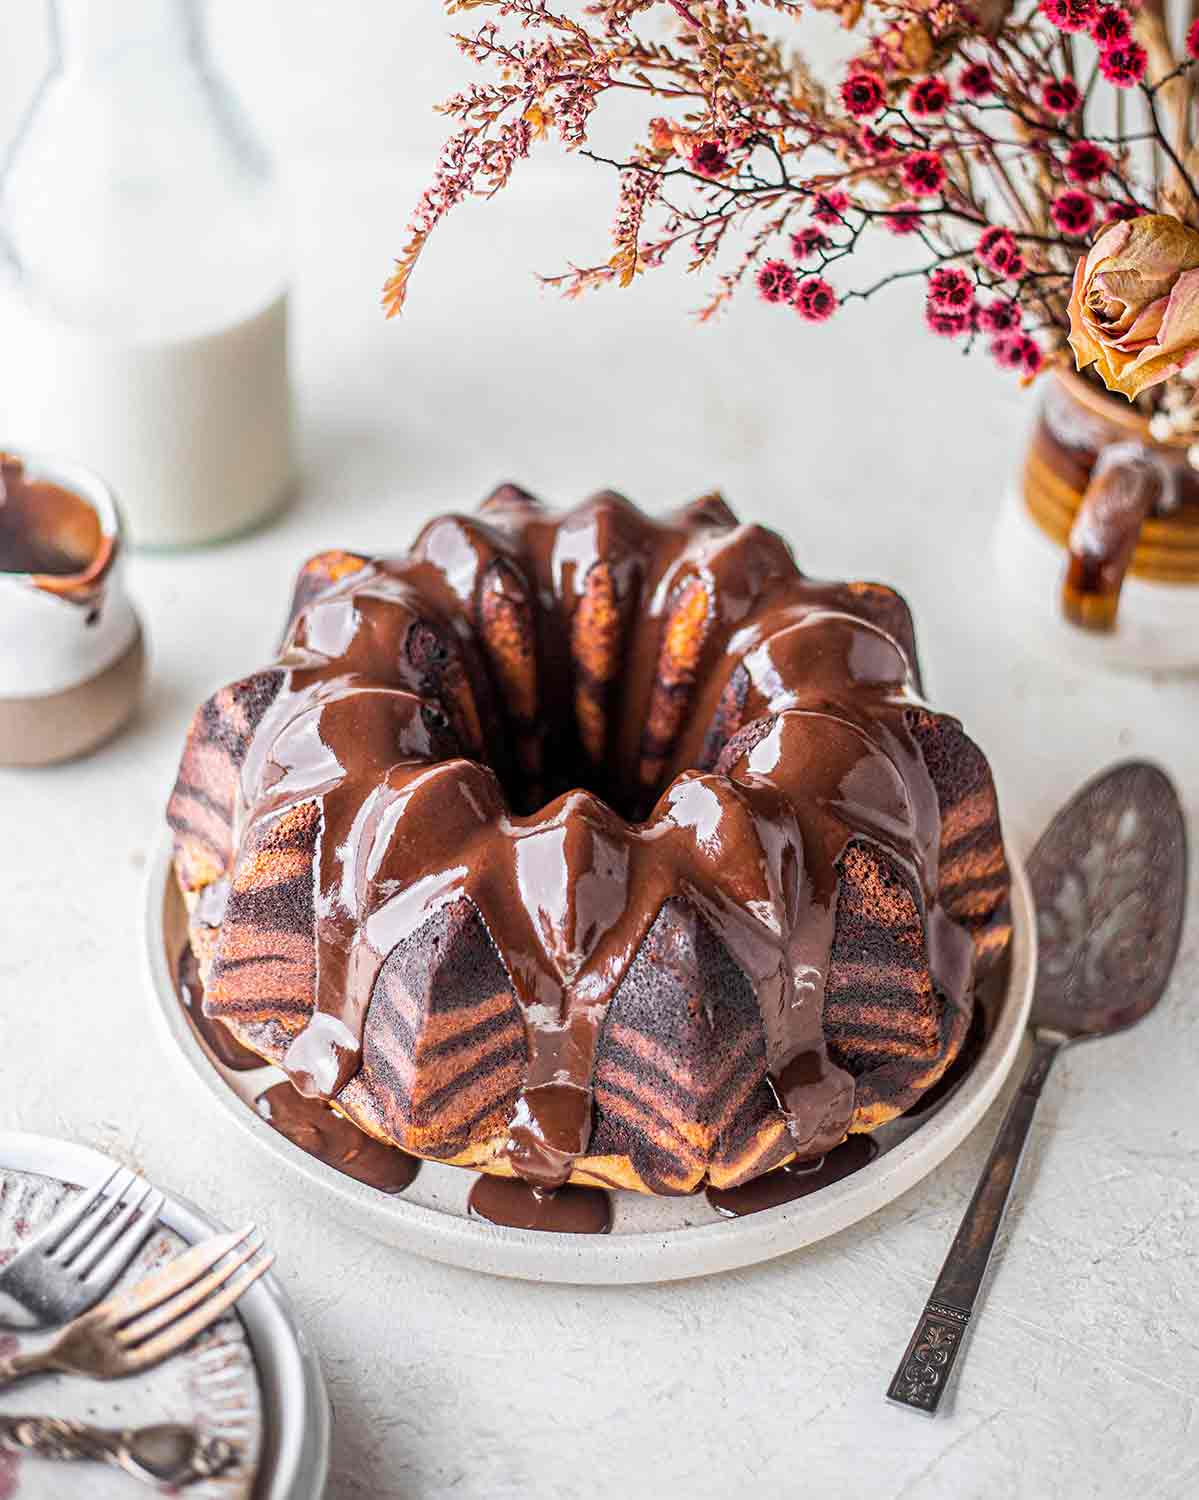 Vegan Zebra Bundt cake with chocolate ganache on top.